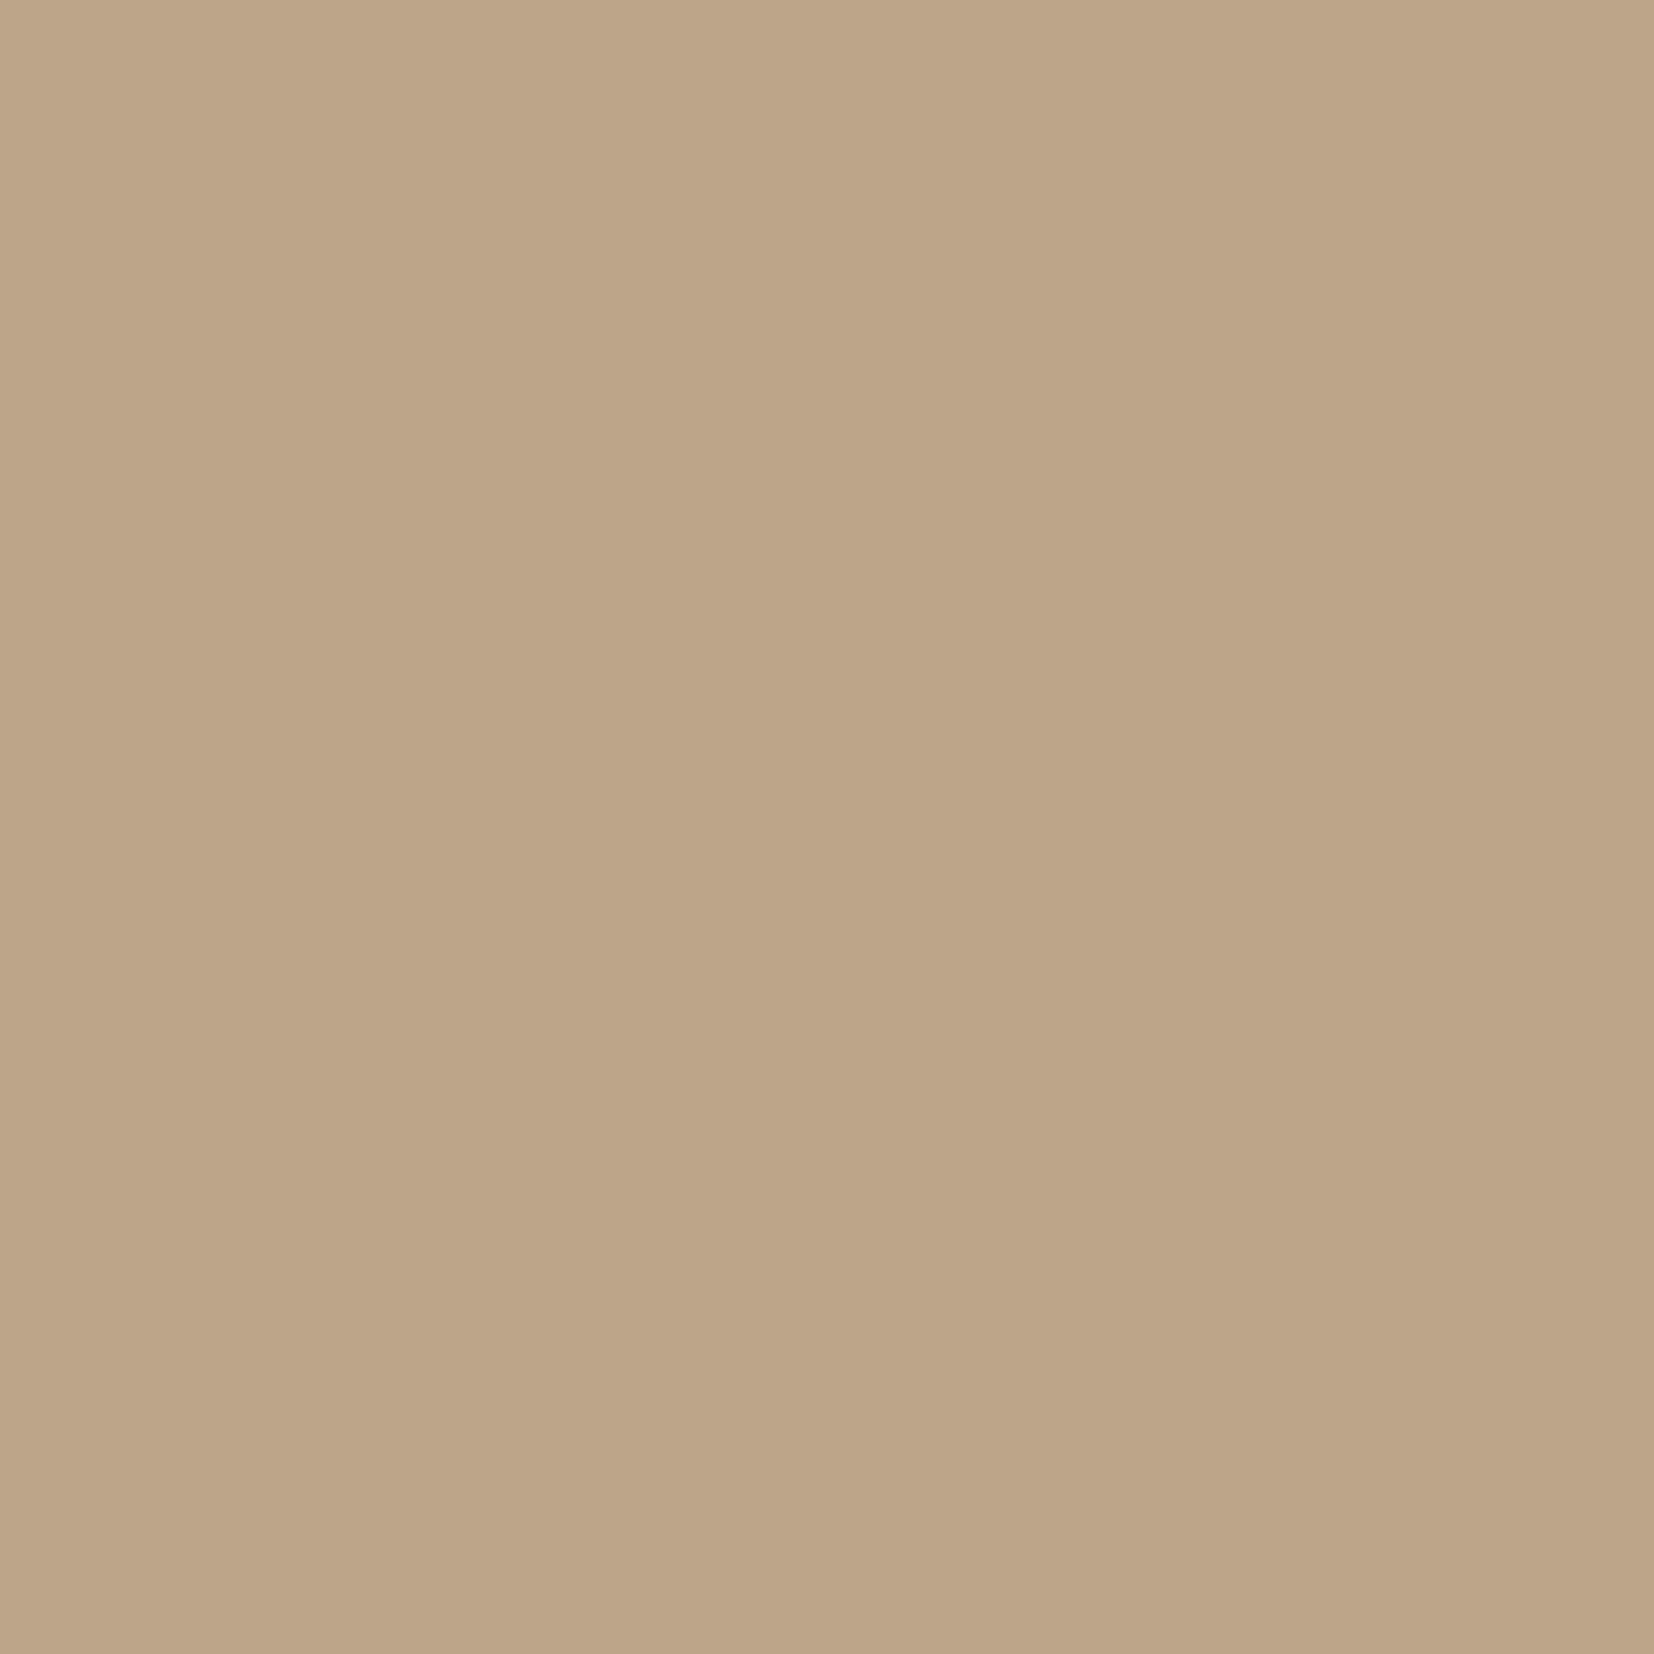 image of beige tan color